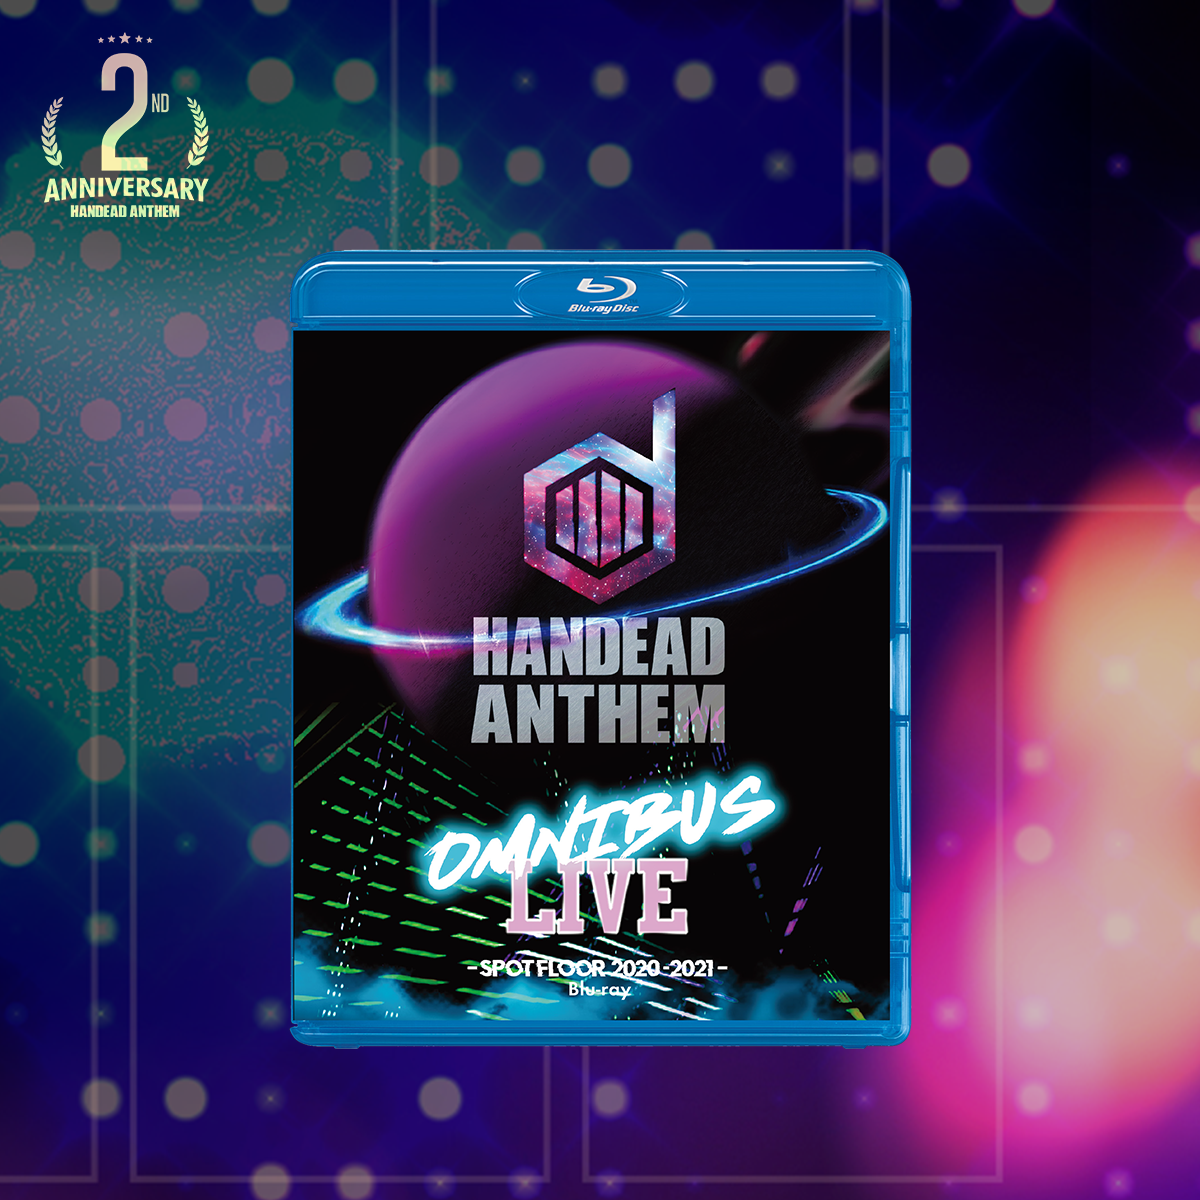 HANDEAD FES. Blu-ray ハンデッドアンセム ブルーレイ03Whynot